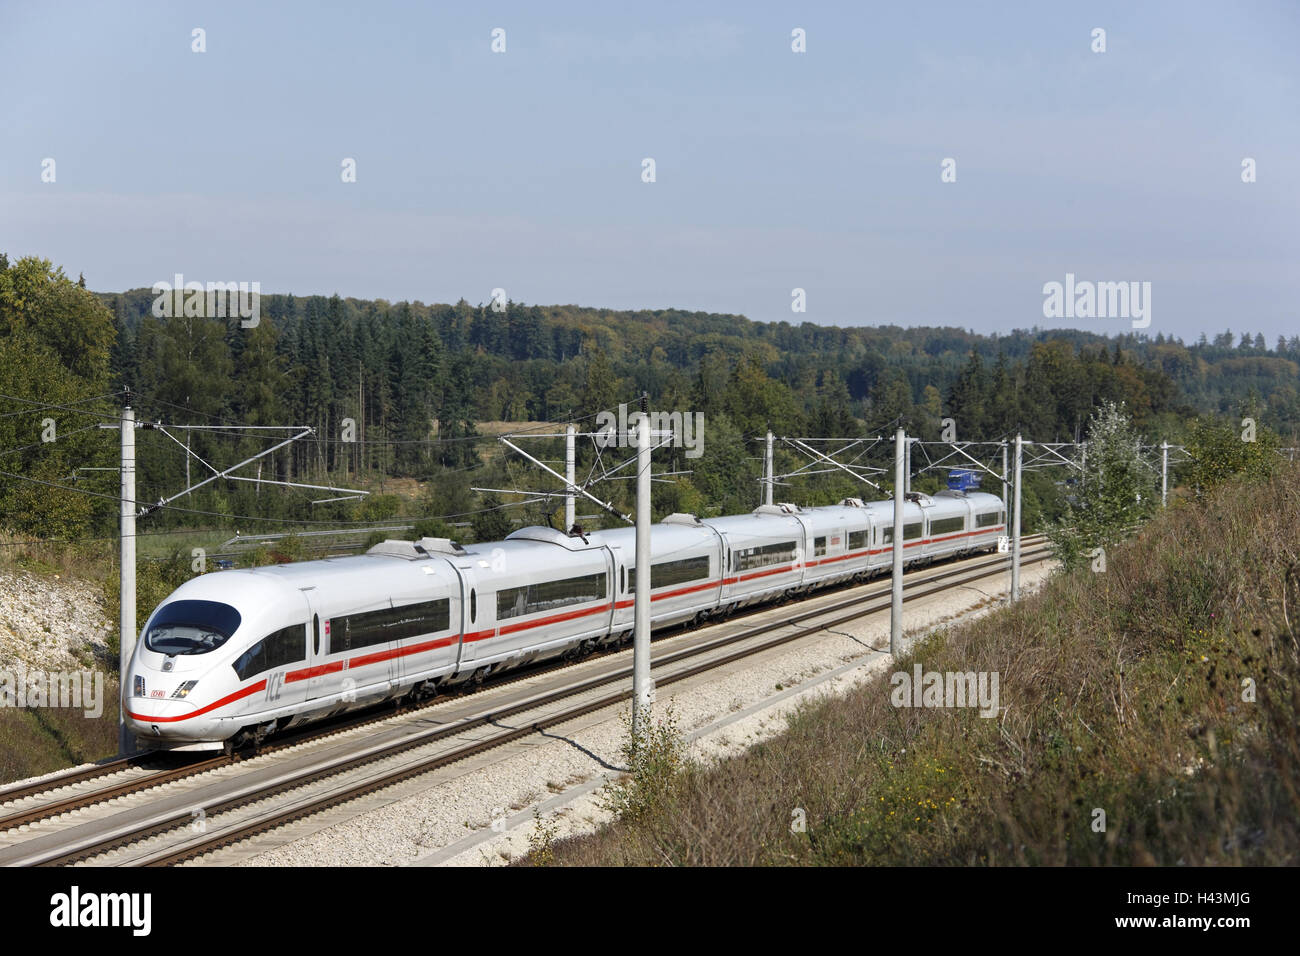 ICE-3, V max. 330 km/h, intercity express 525 Dortmund-Munich, high-speed passage Nuremberg-Ingolstadt, scenery, Stock Photo